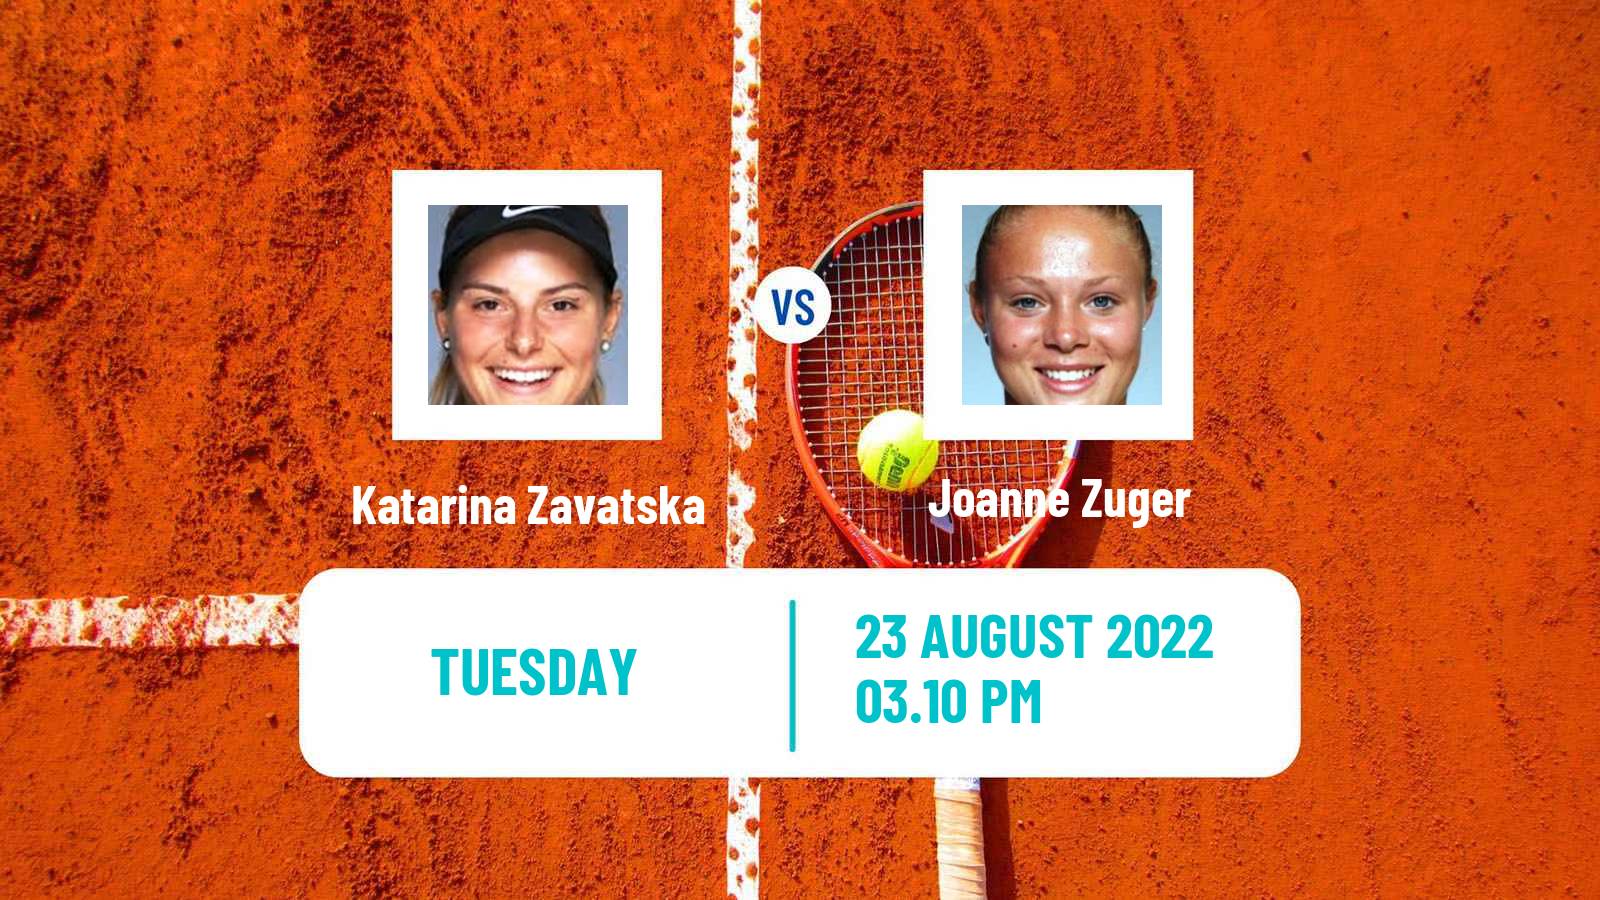 Tennis WTA US Open Katarina Zavatska - Joanne Zuger